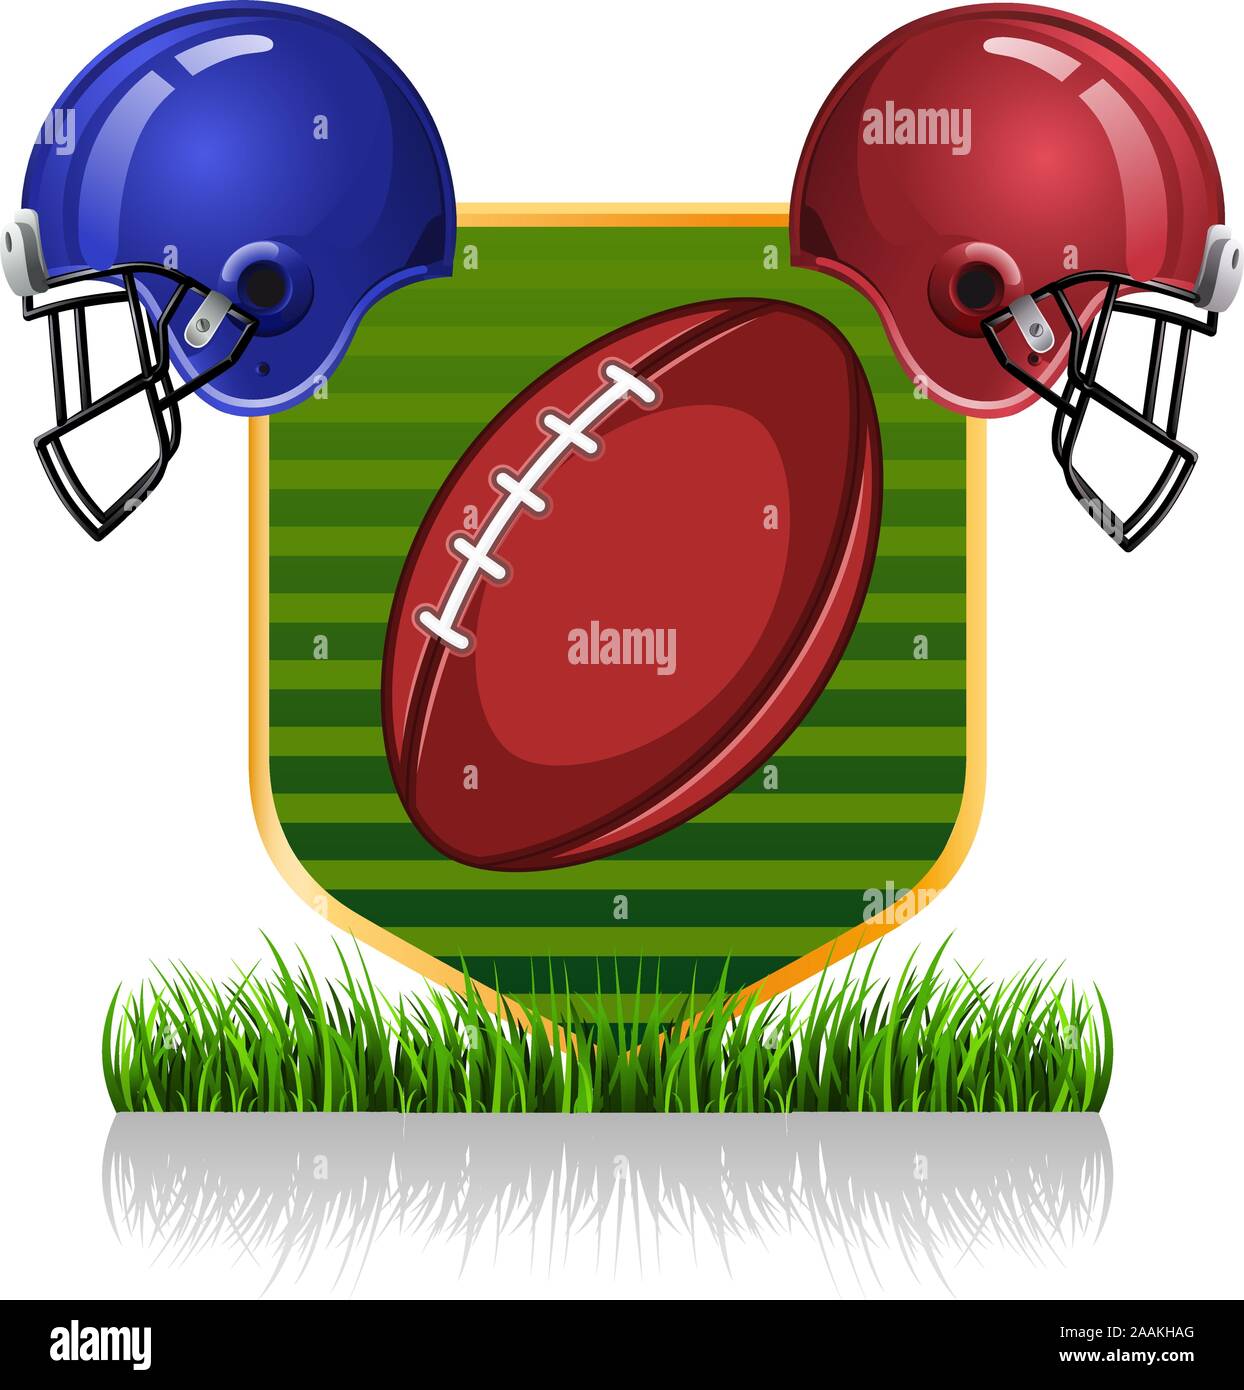 Football helmets with field illustration Stock Vector